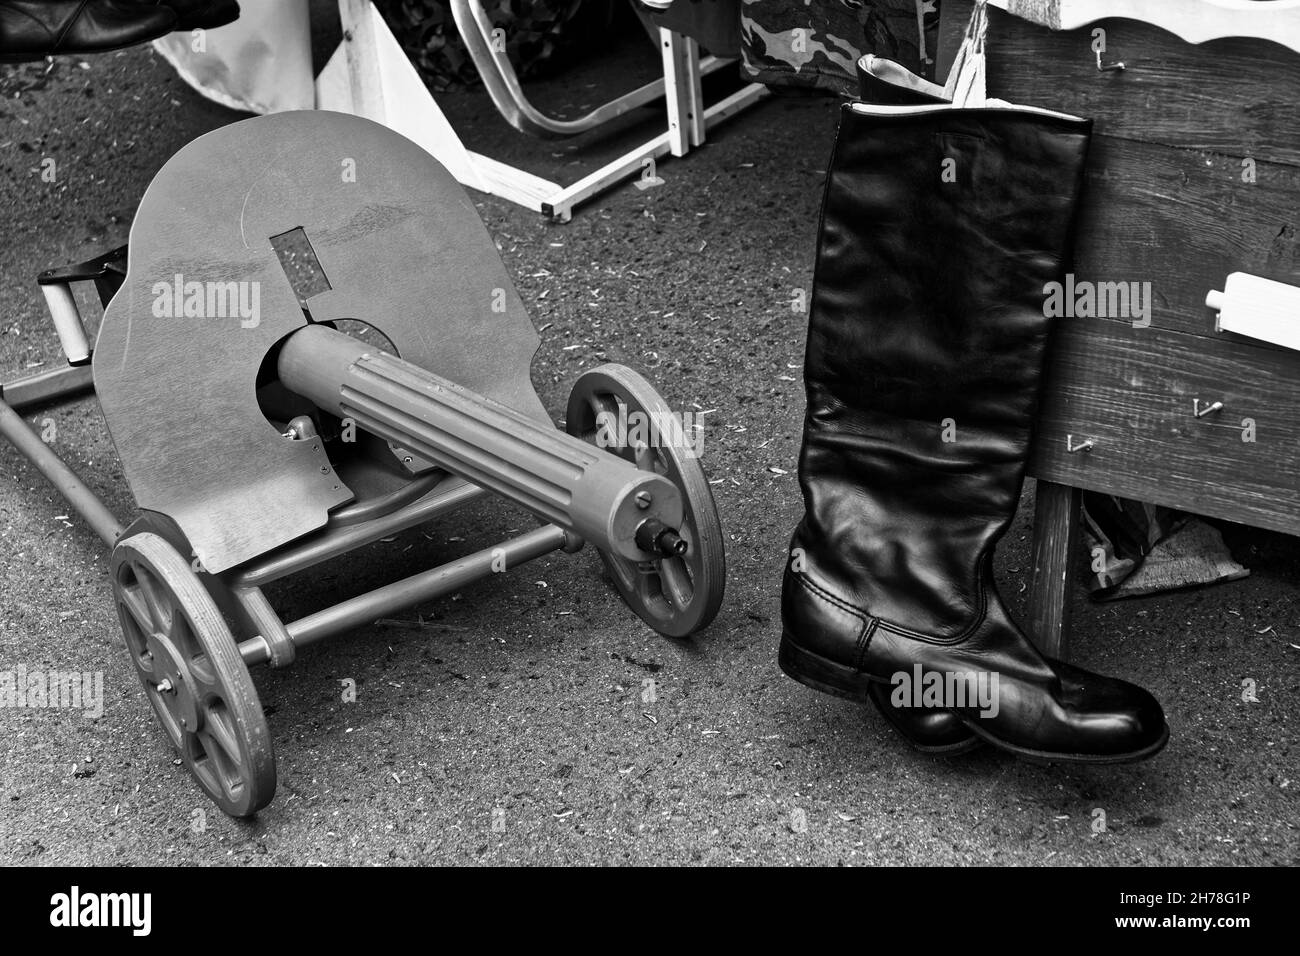 Officer's boots and fake machine gun MAXIM Stock Photo